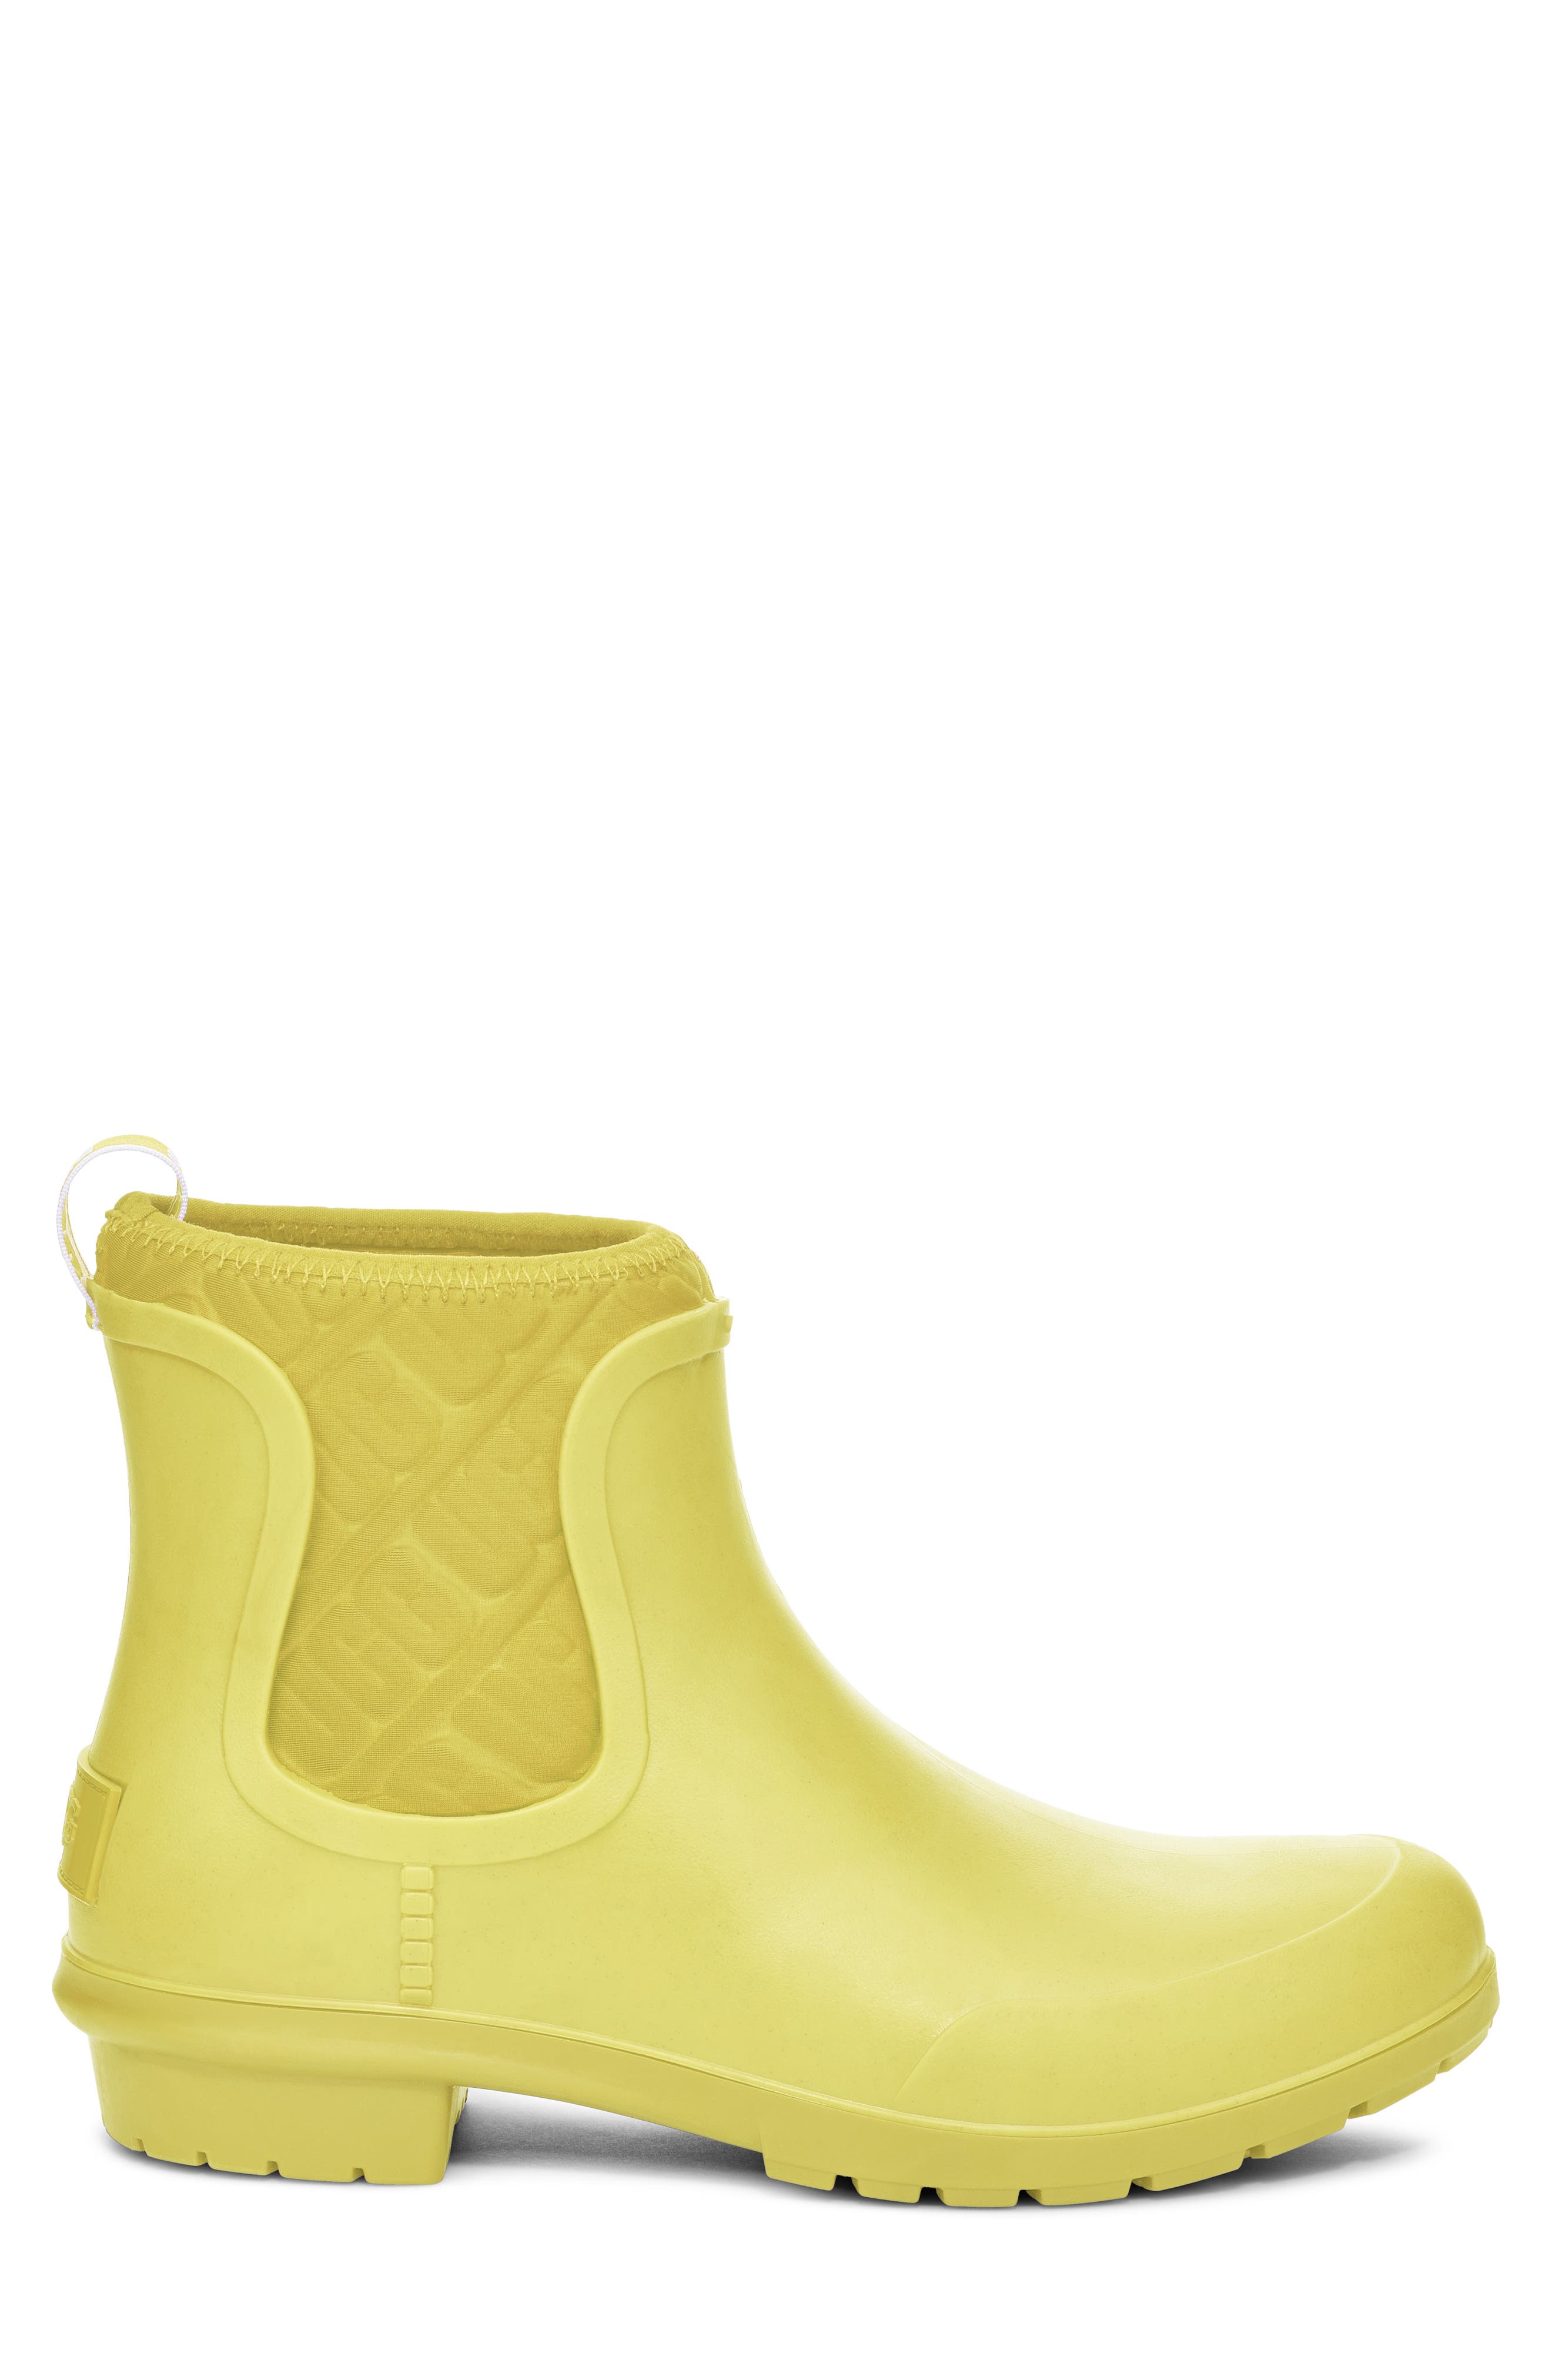 Women's Yellow Rain Boots | Nordstrom